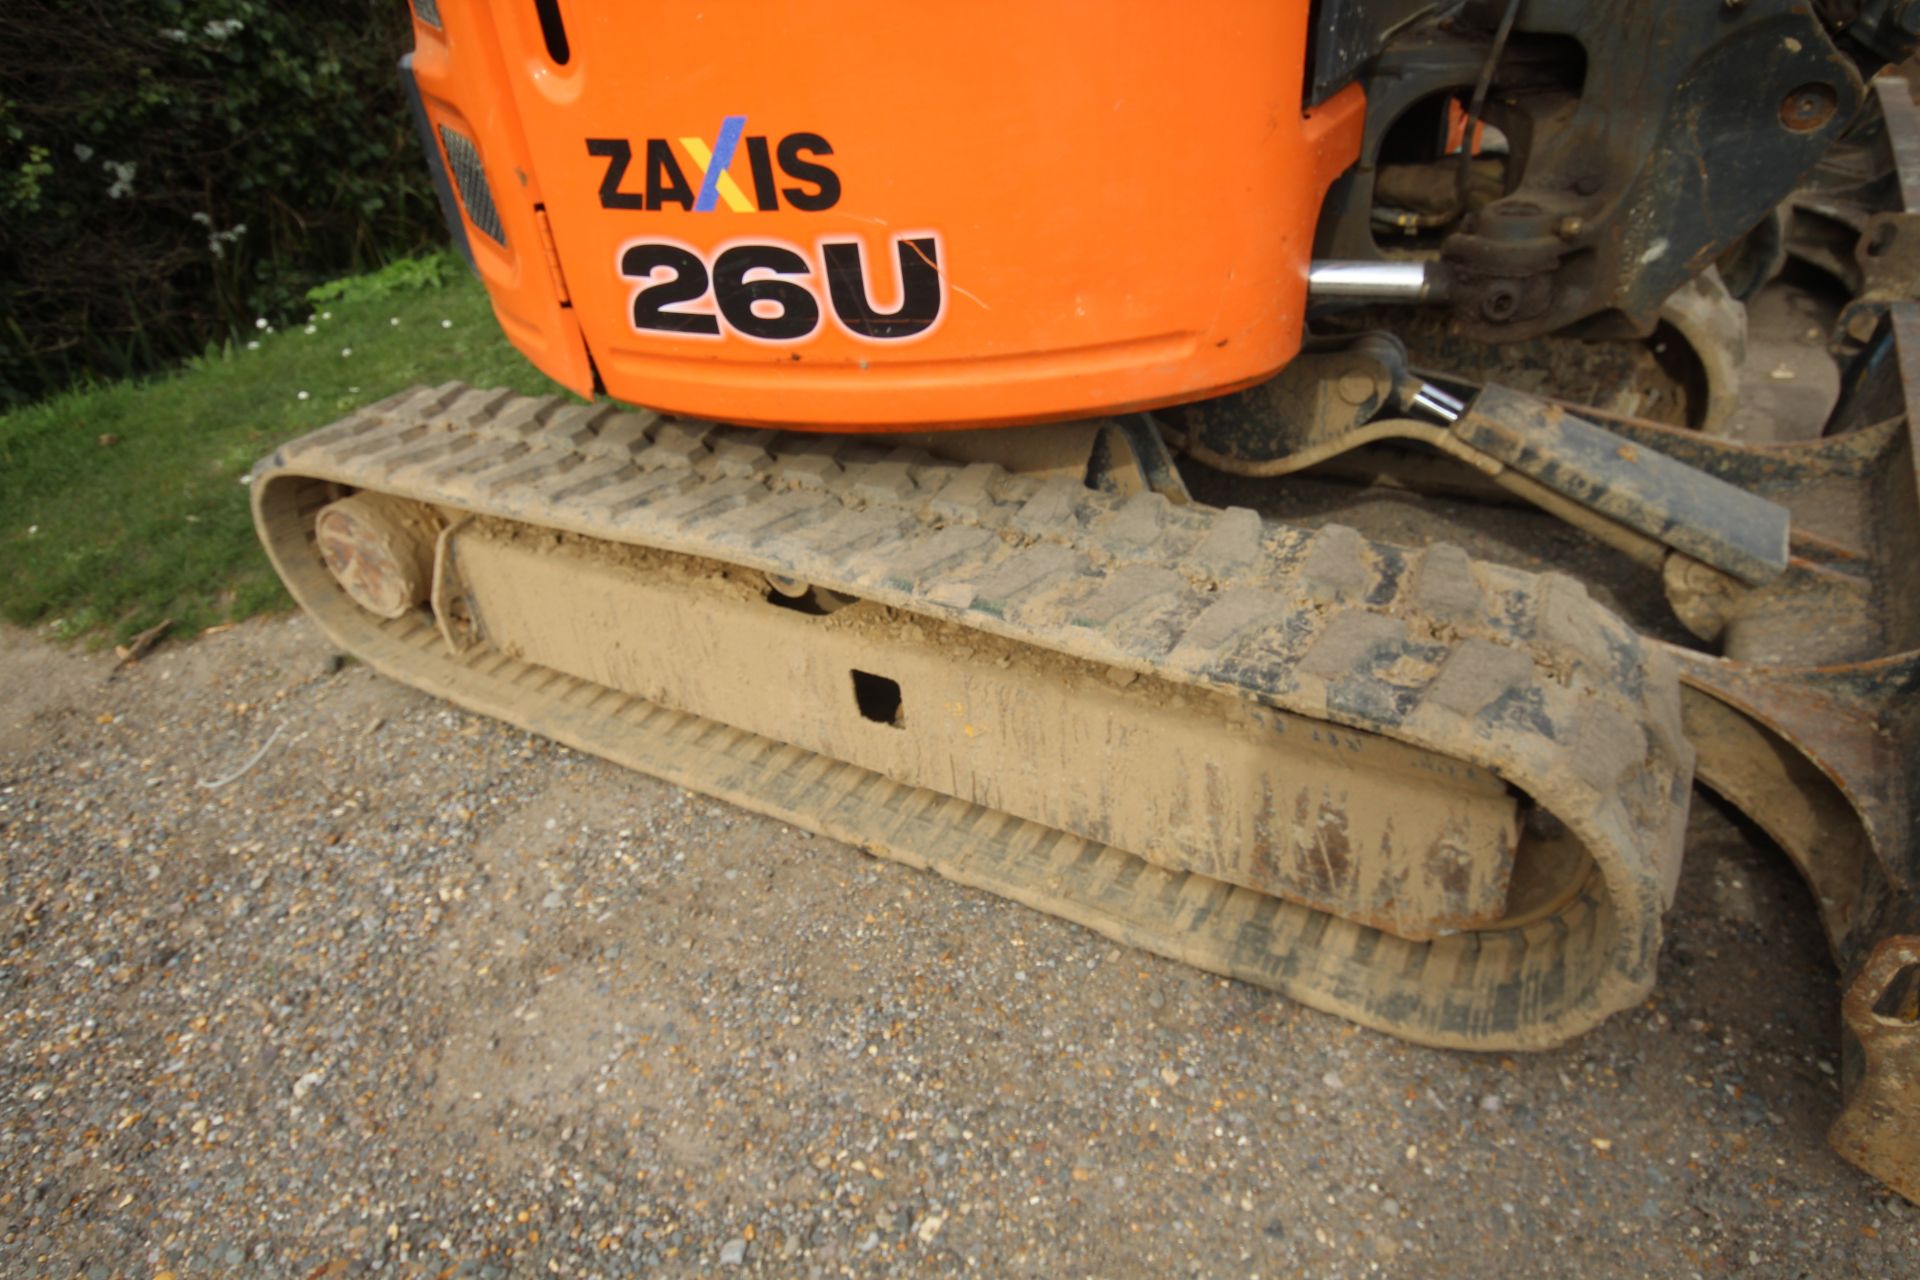 Hitachi Z-Axis 26U-5a 2.6T rubber track excavator. 2018. 2,061 hours. Serial number HCM - Bild 20 aus 61